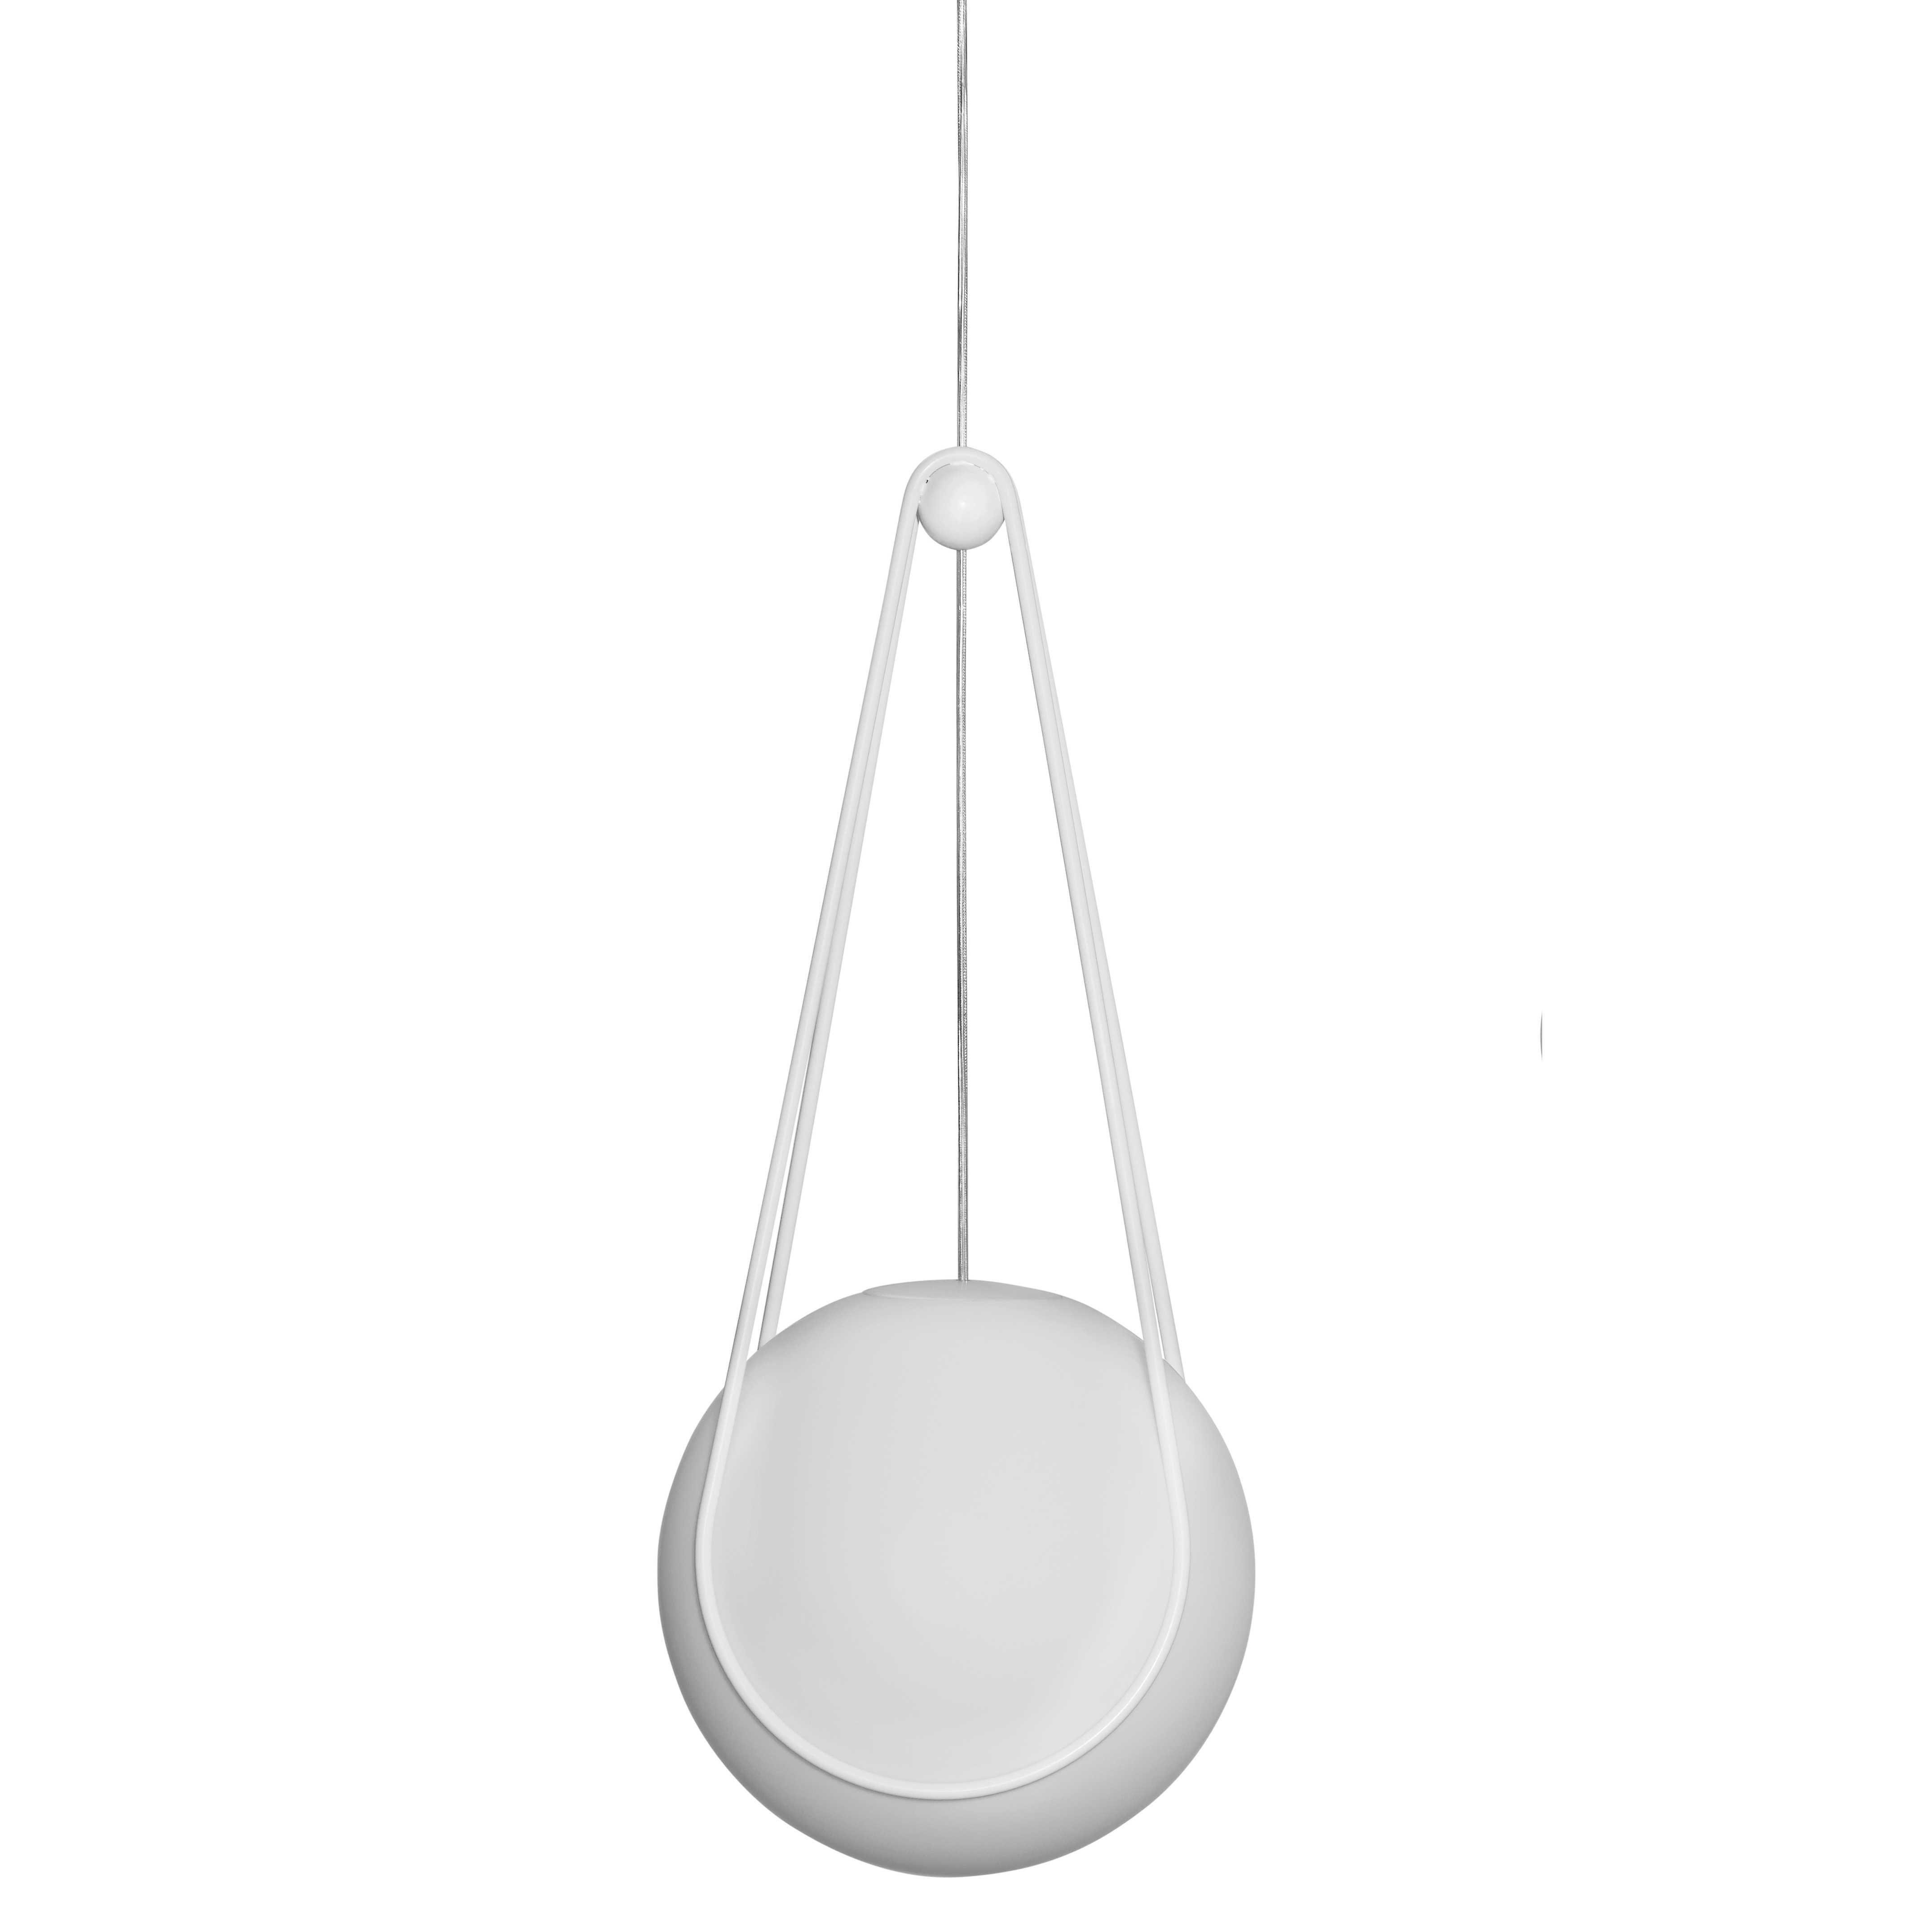 Design House Stockholm Luna Kosmos hanglamp medium